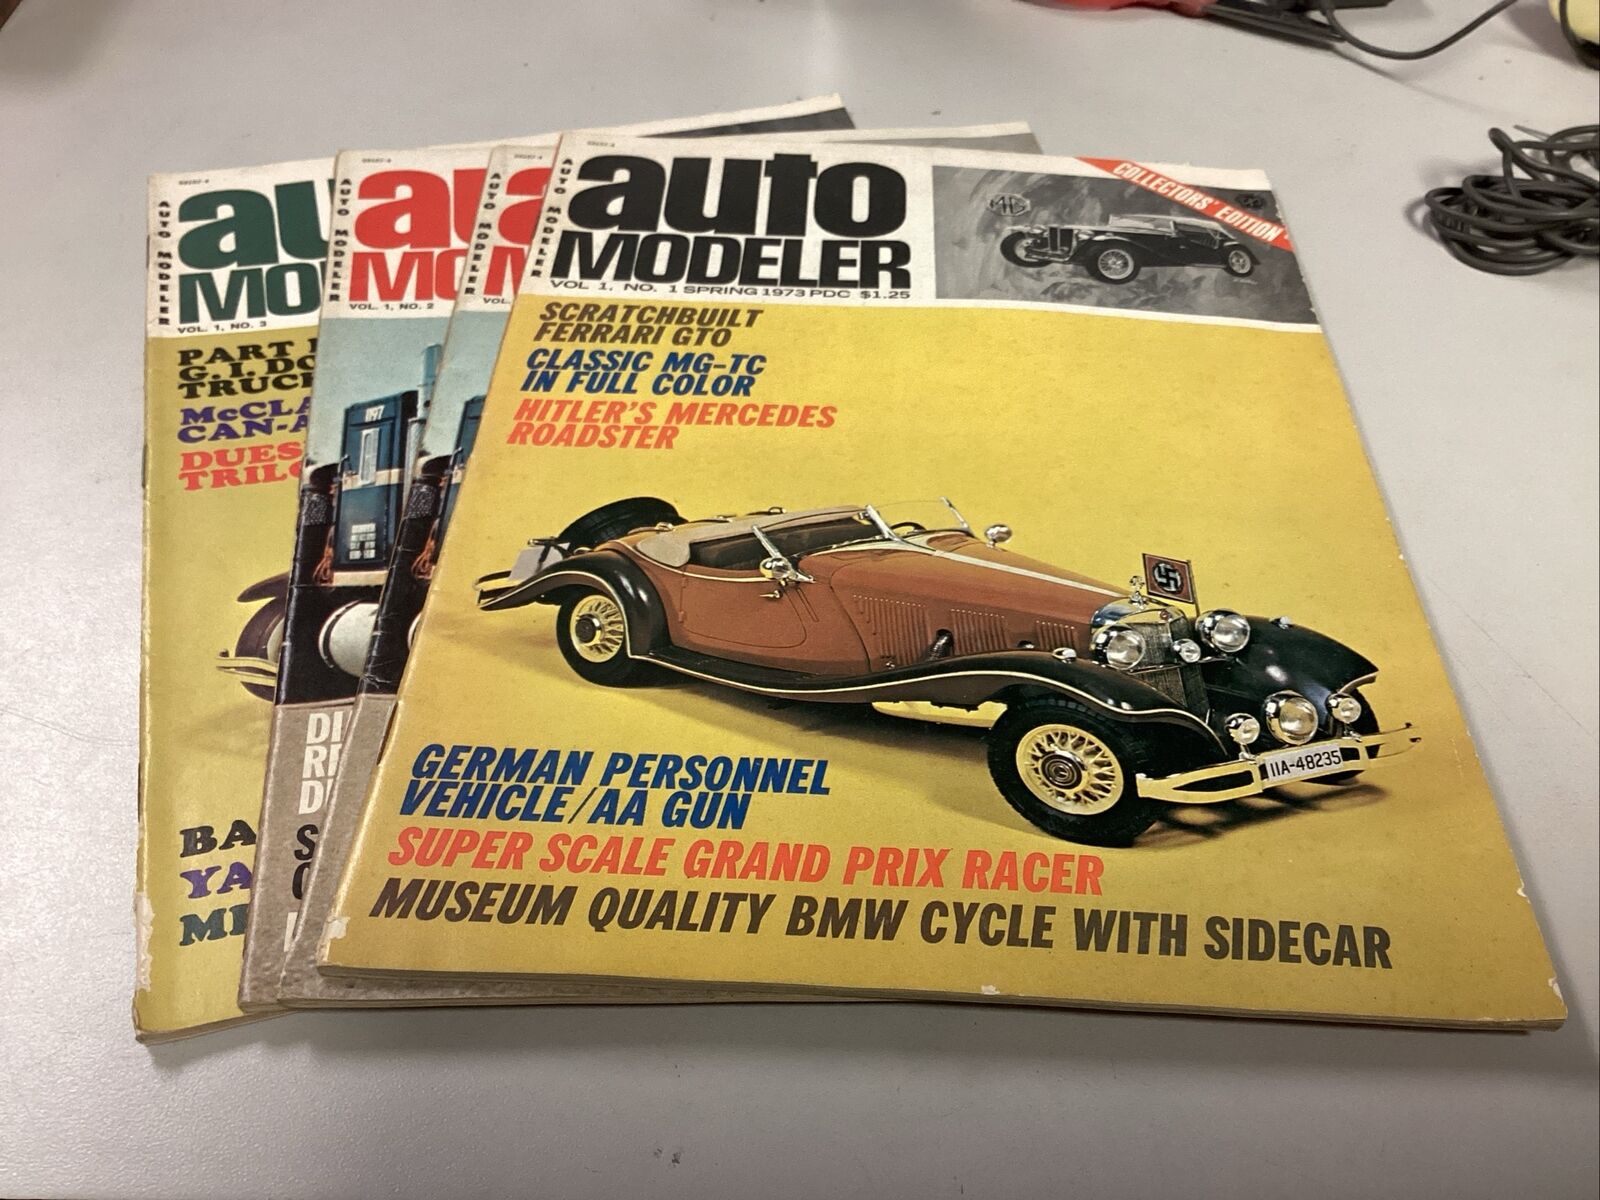 Vintage 1973 Auto Modeler Magazine Lot Of 4 Volume 1 Nos. 1, 2, 3 High Grade